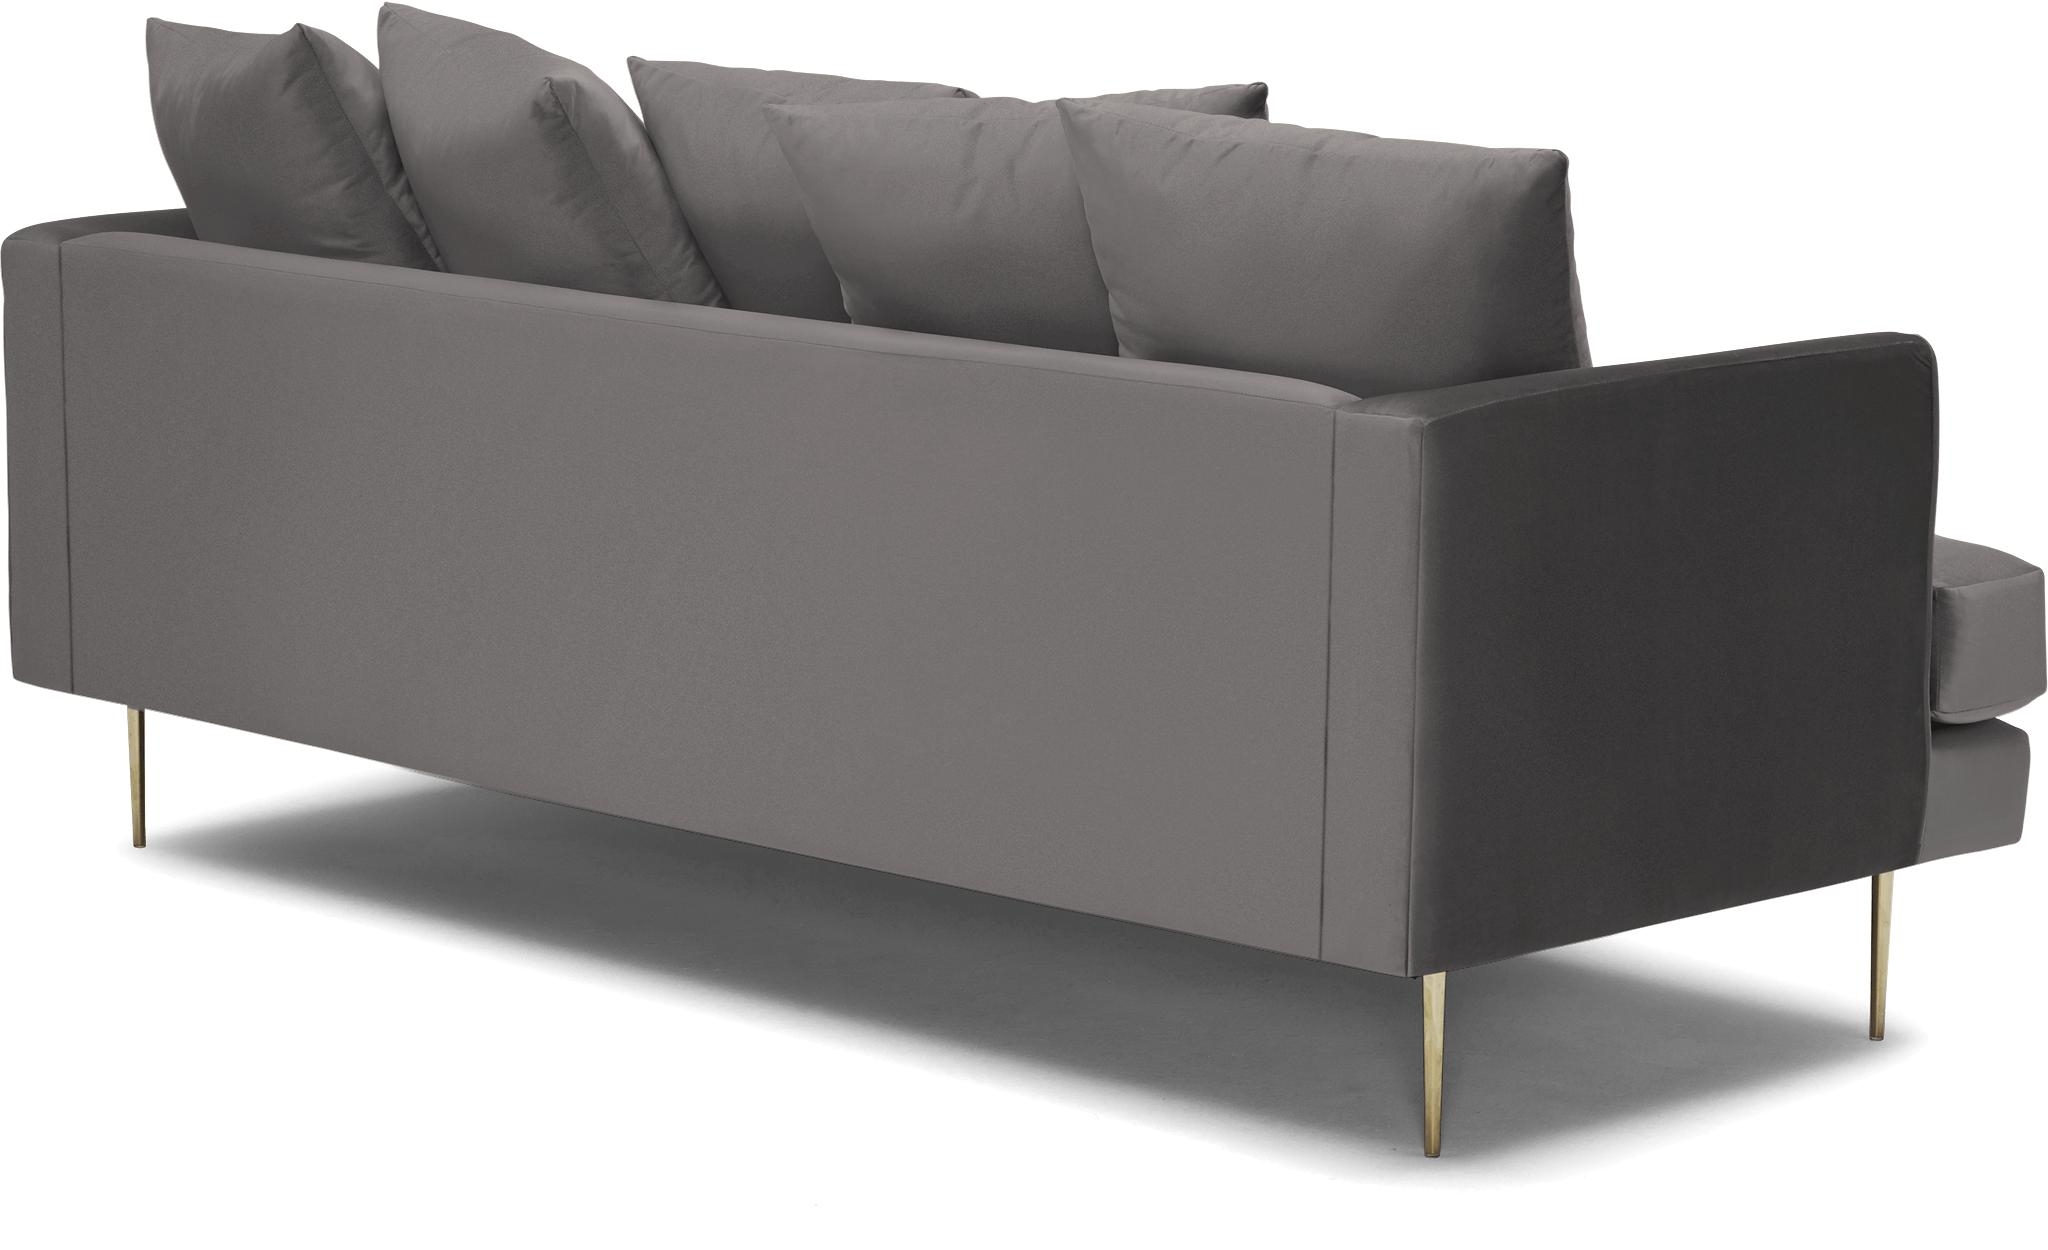 Gray Aime Mid Century Modern Sofa - Taylor Felt Grey - Image 3